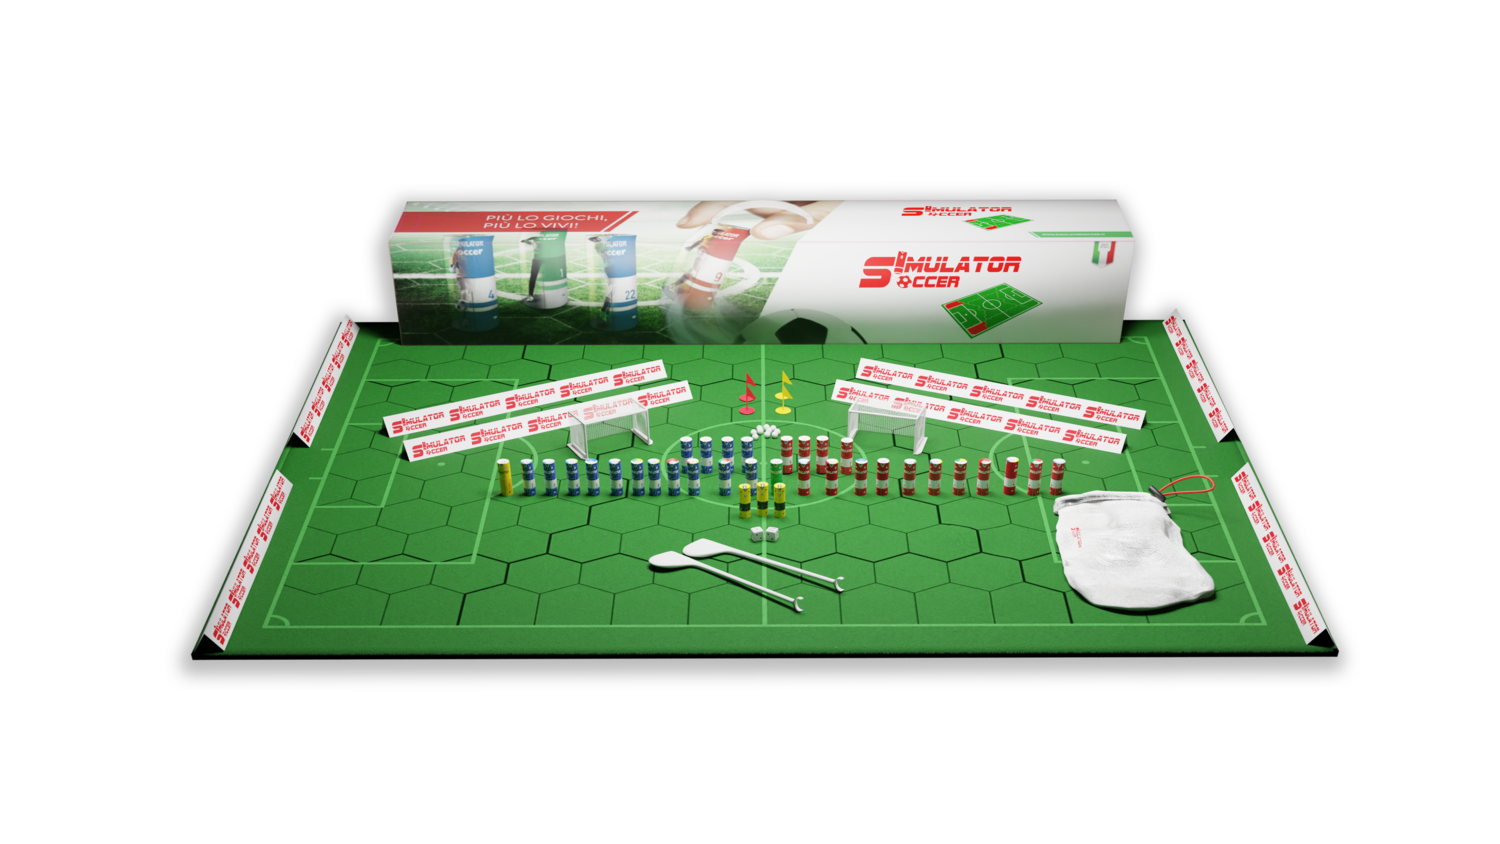 Simulator Soccer - the game